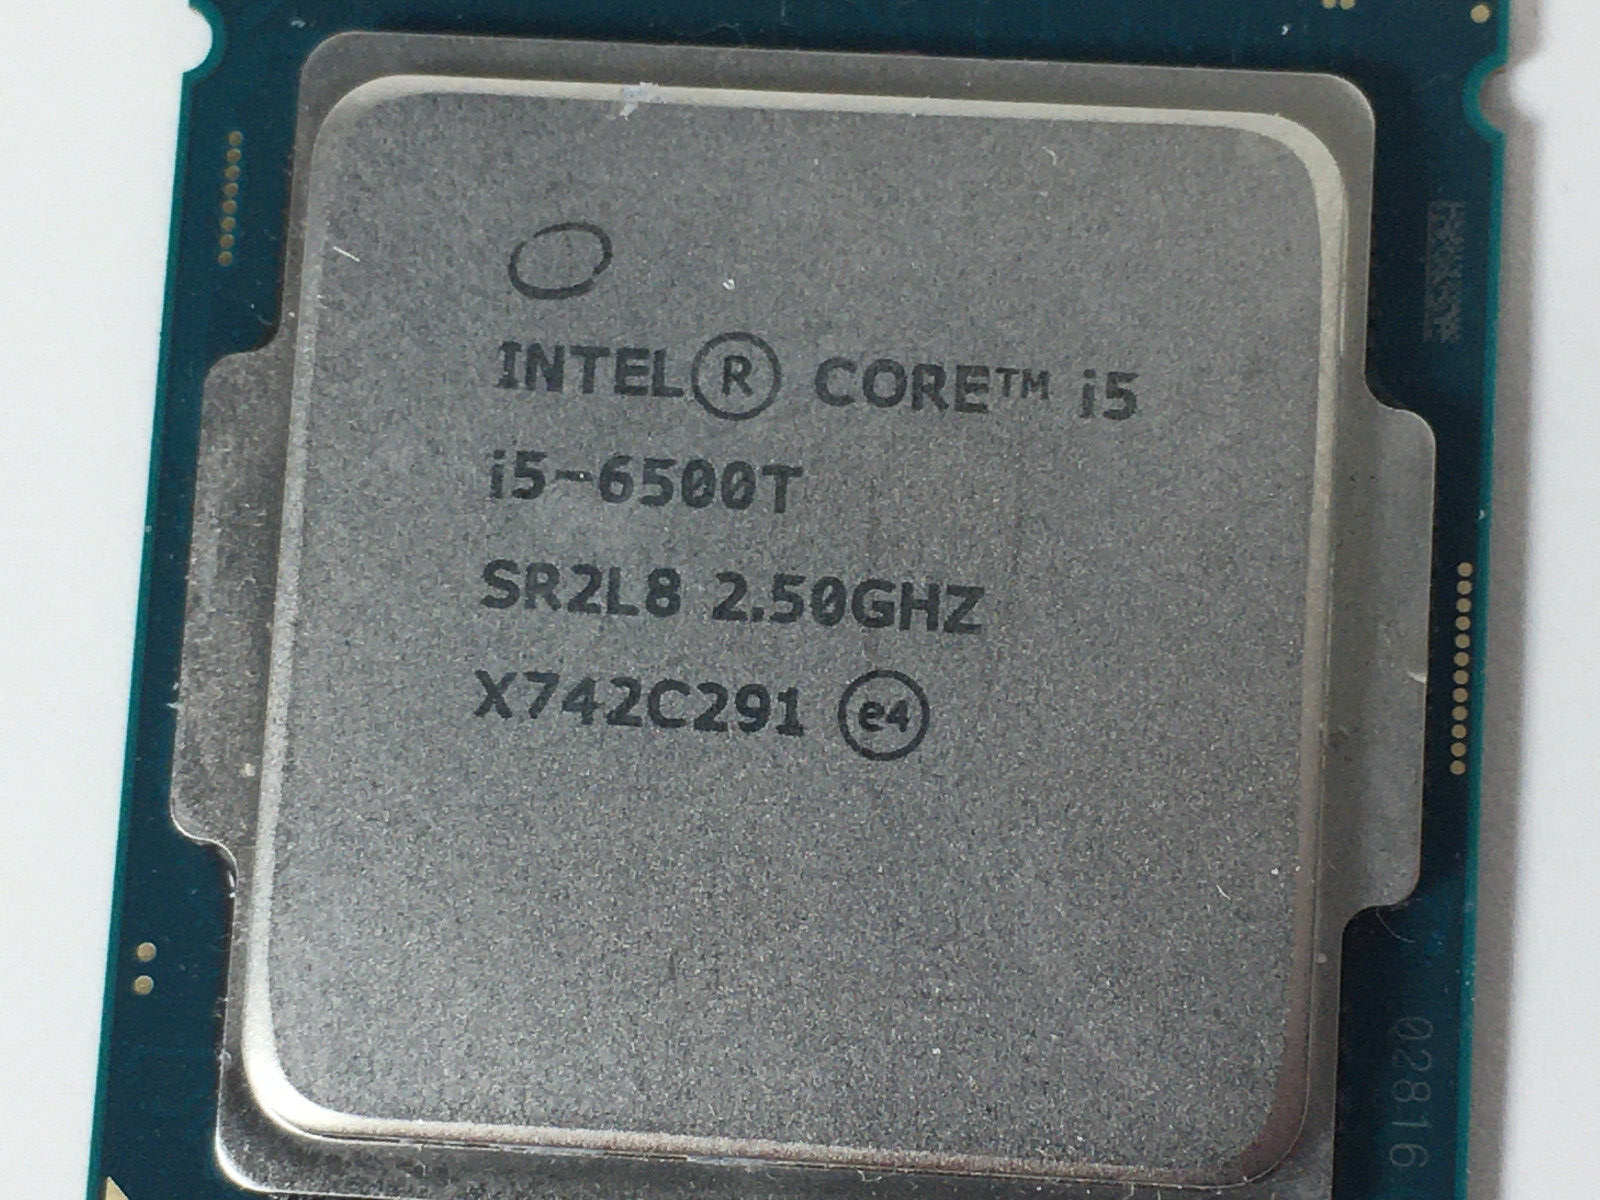 Primary image for Intel Core i5 - 6500T / SR2L8 2.50GHz 6MB Quad-Core CPU LGA1151